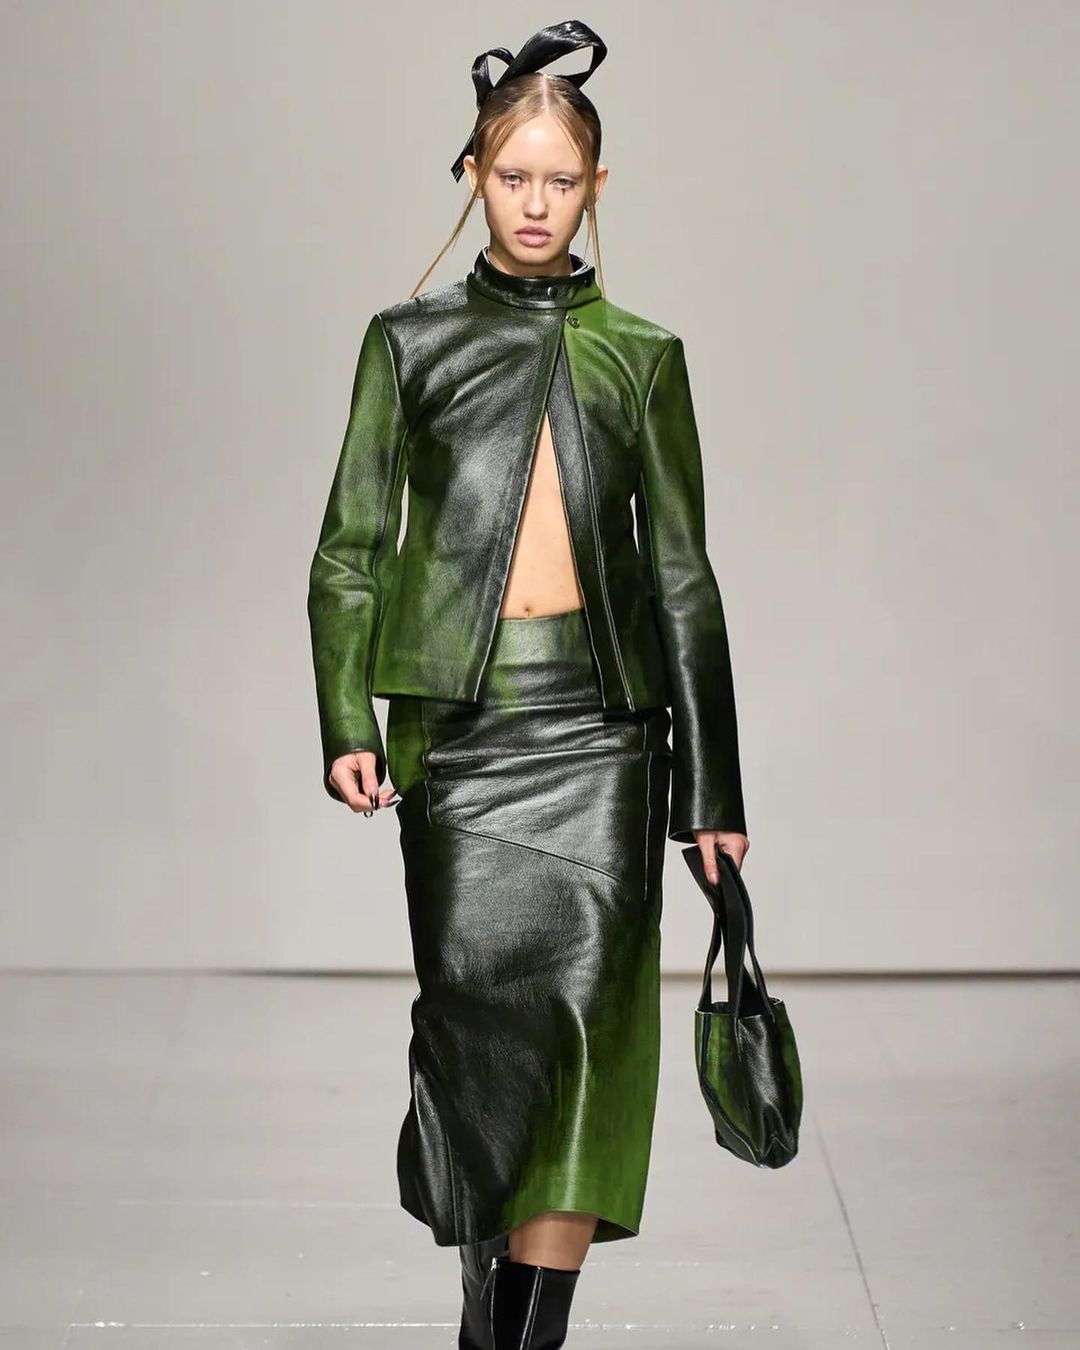 Model walking down the runway in green leather